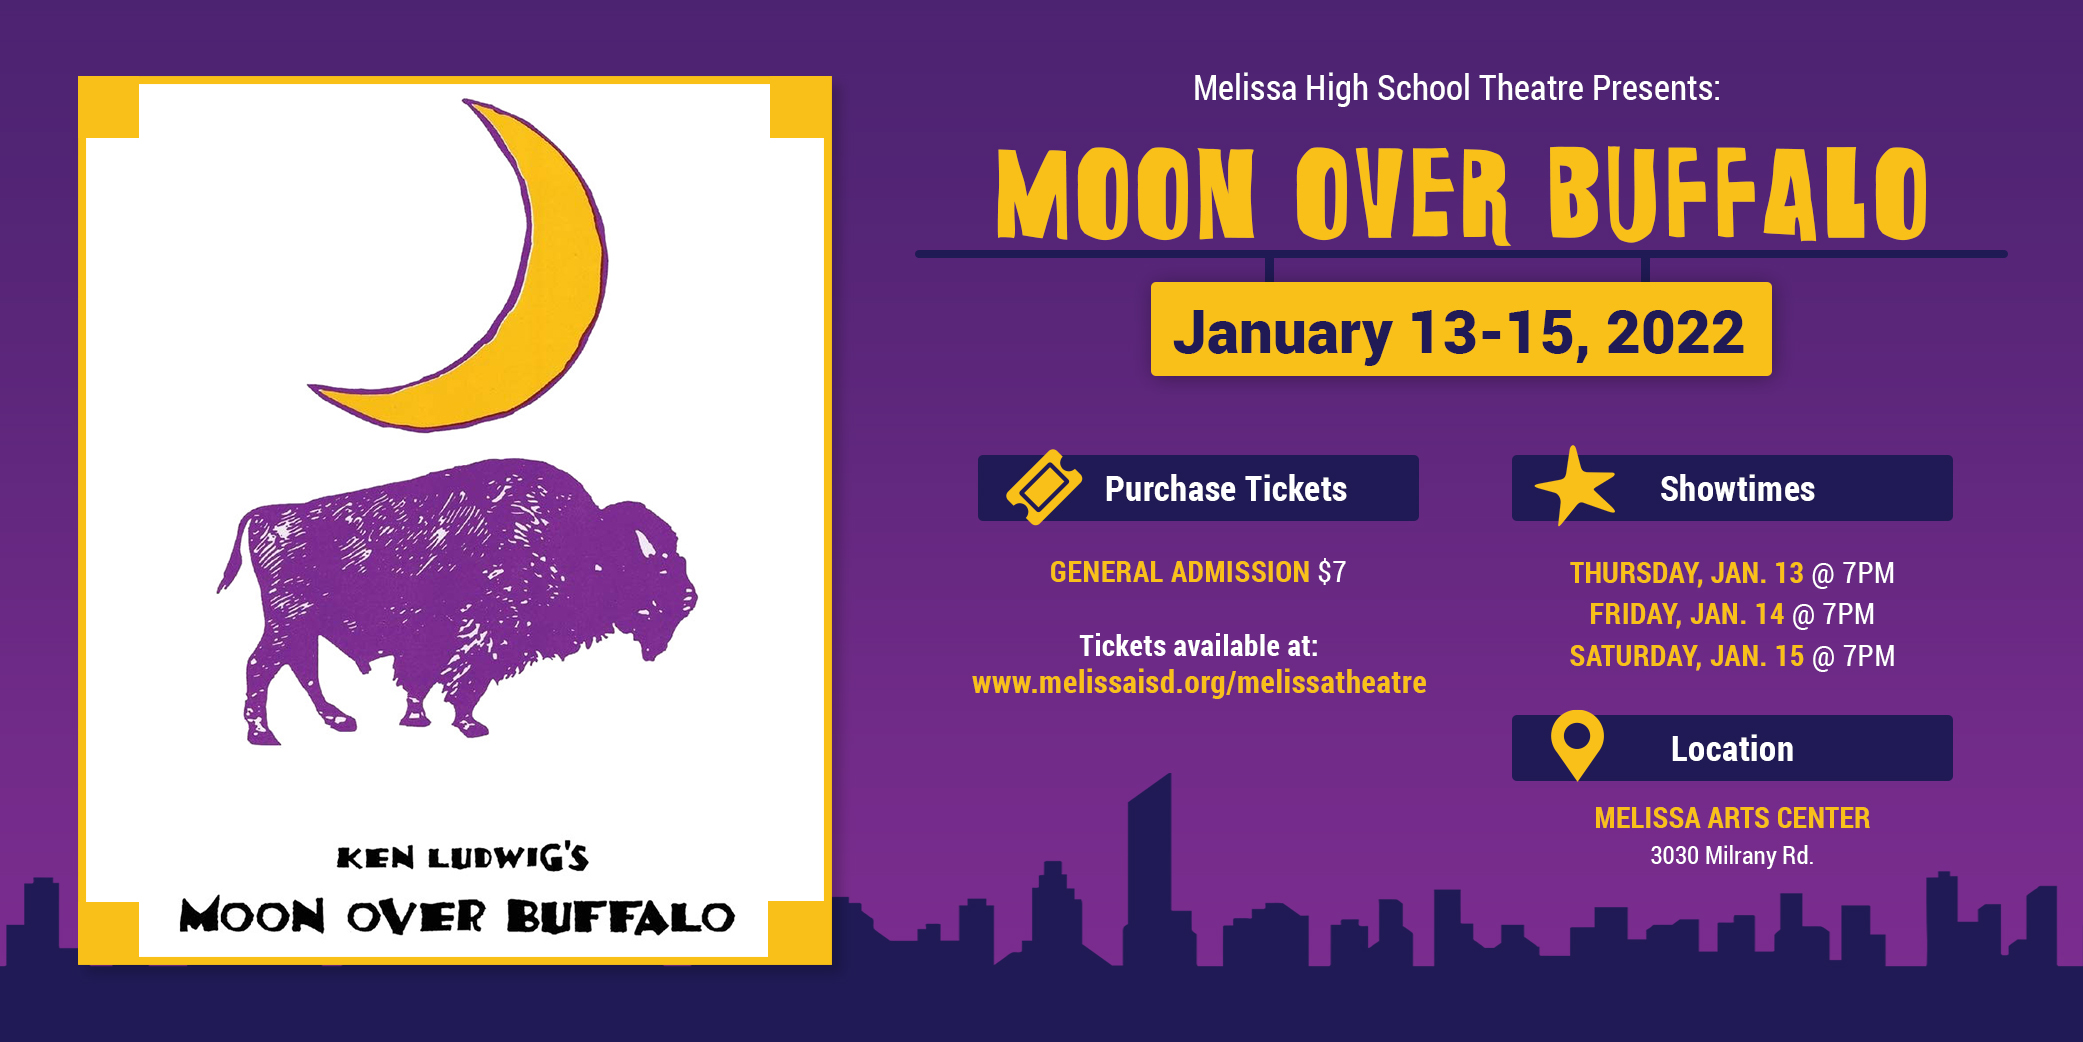 a graphic advertising "Moon Over Buffalo"